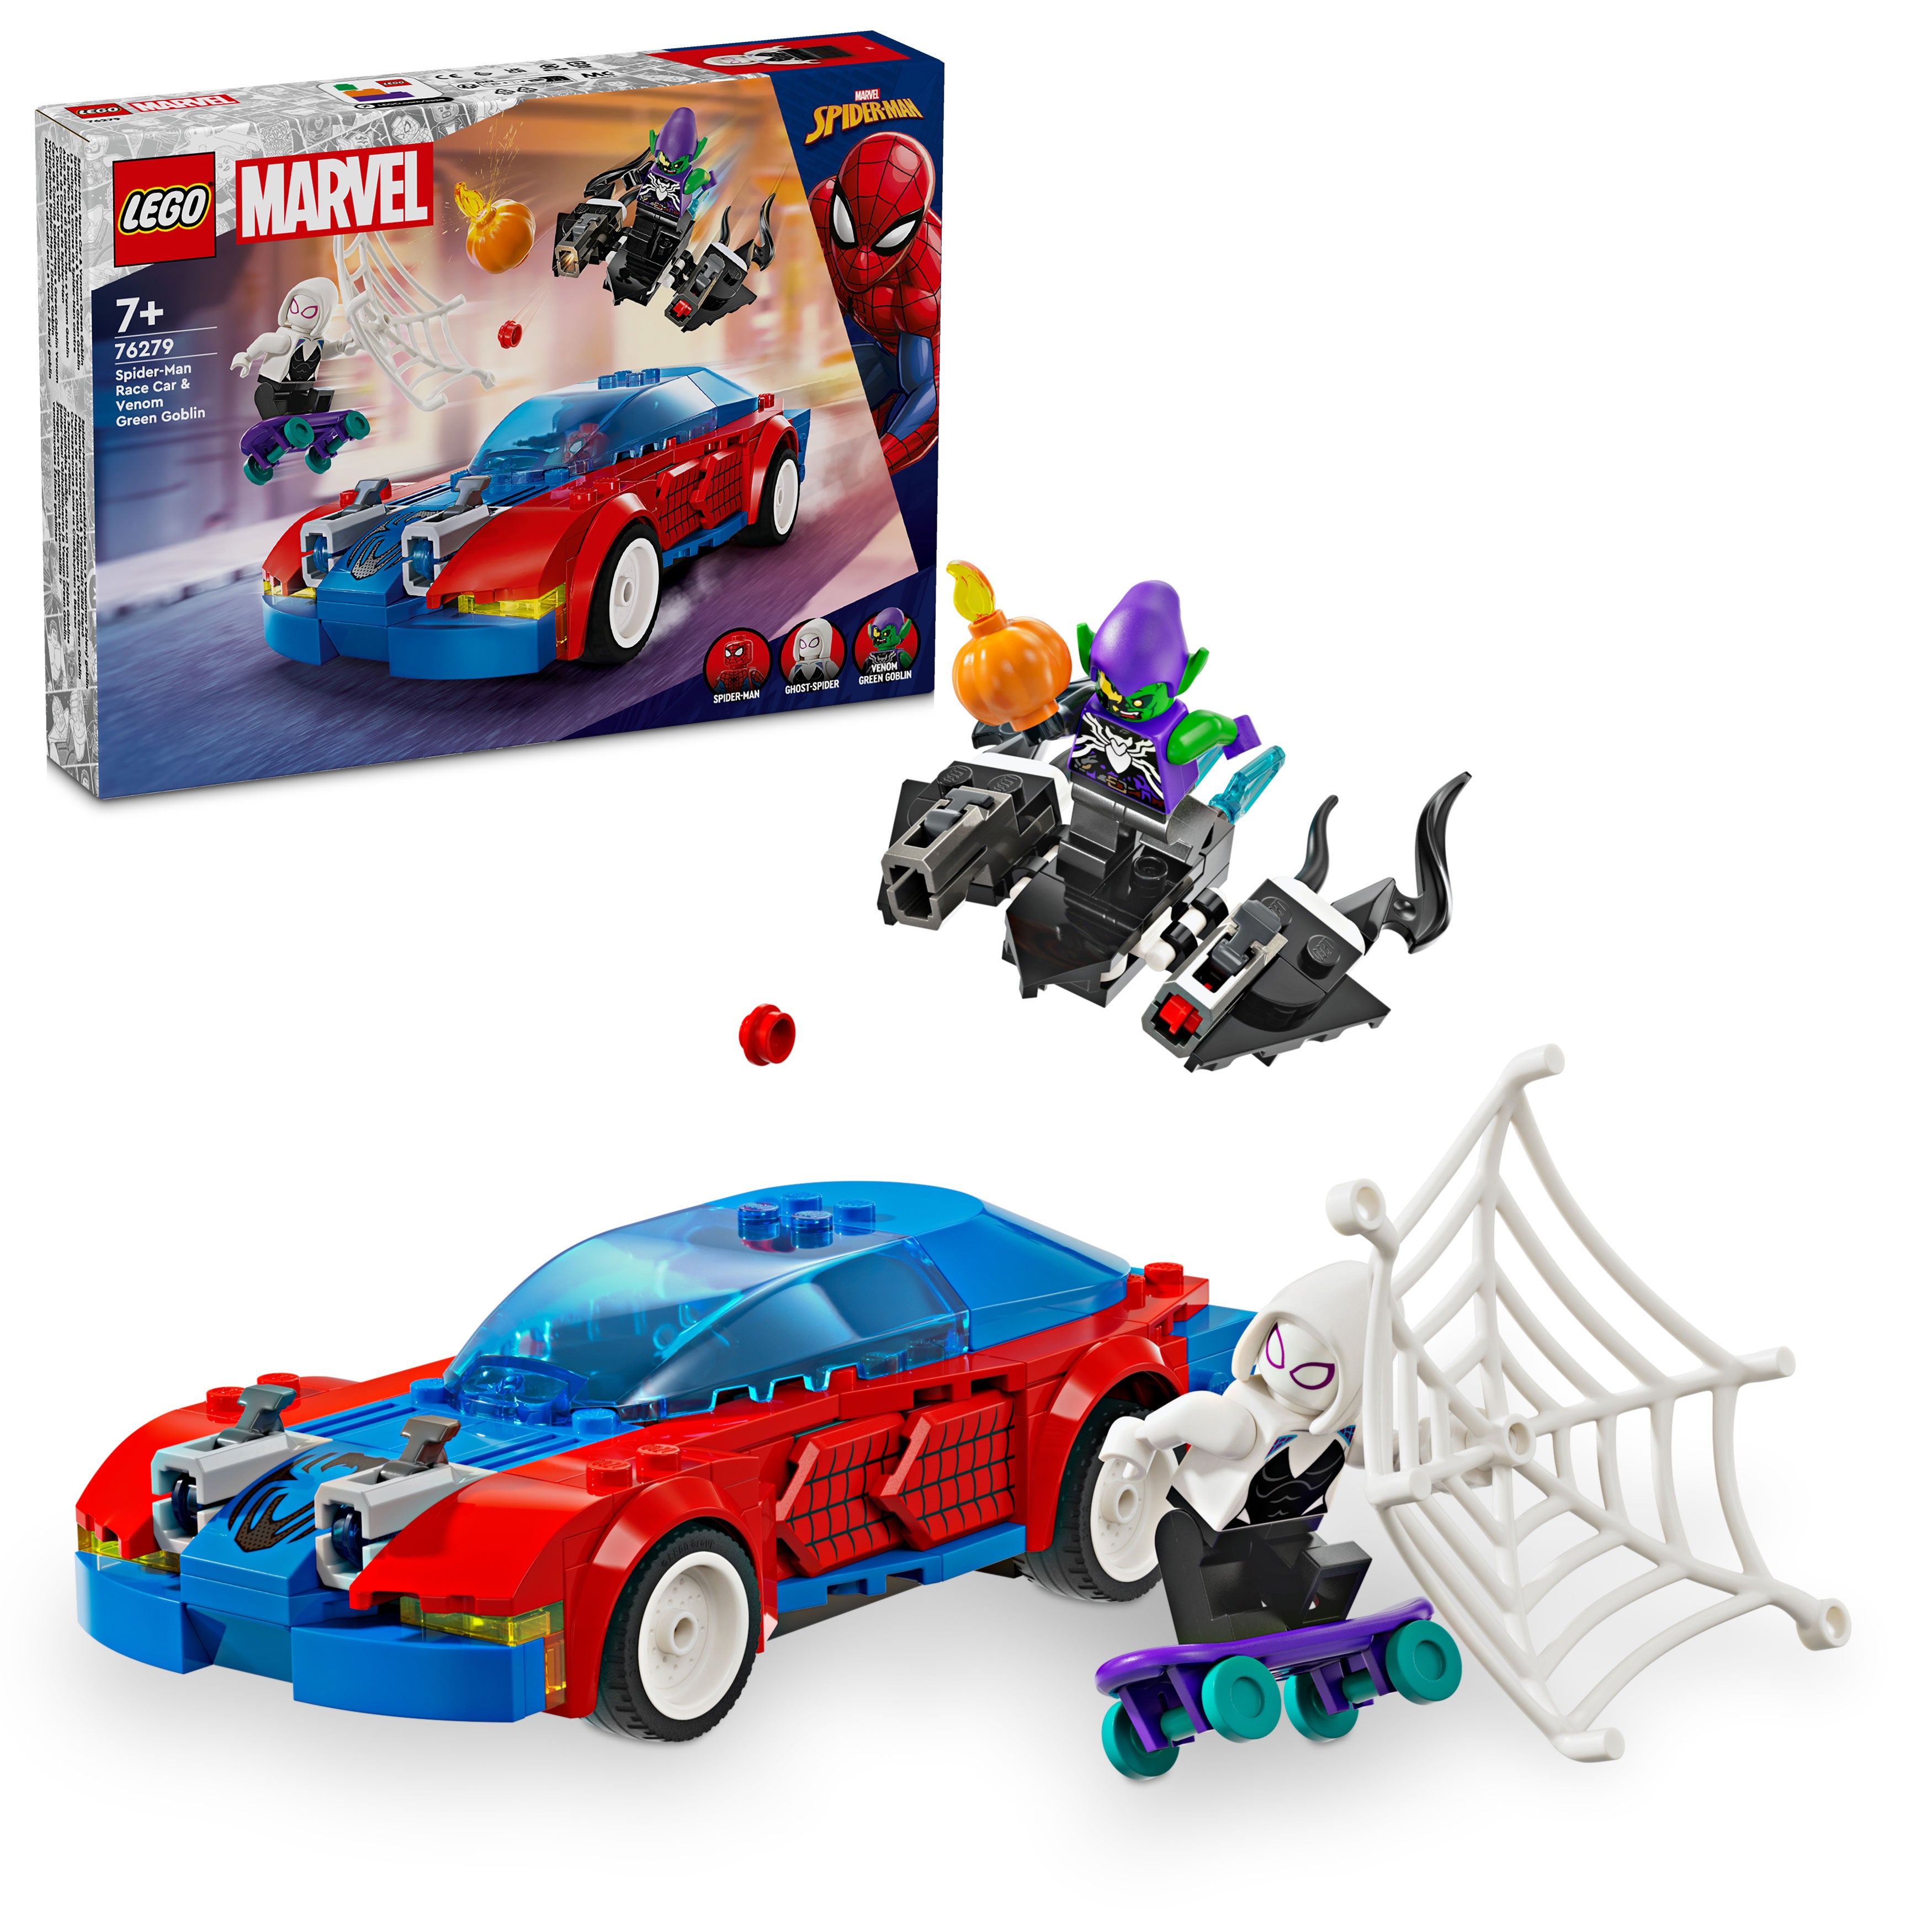 Lego 76279 Spider-Man Race Car & Green Goblin